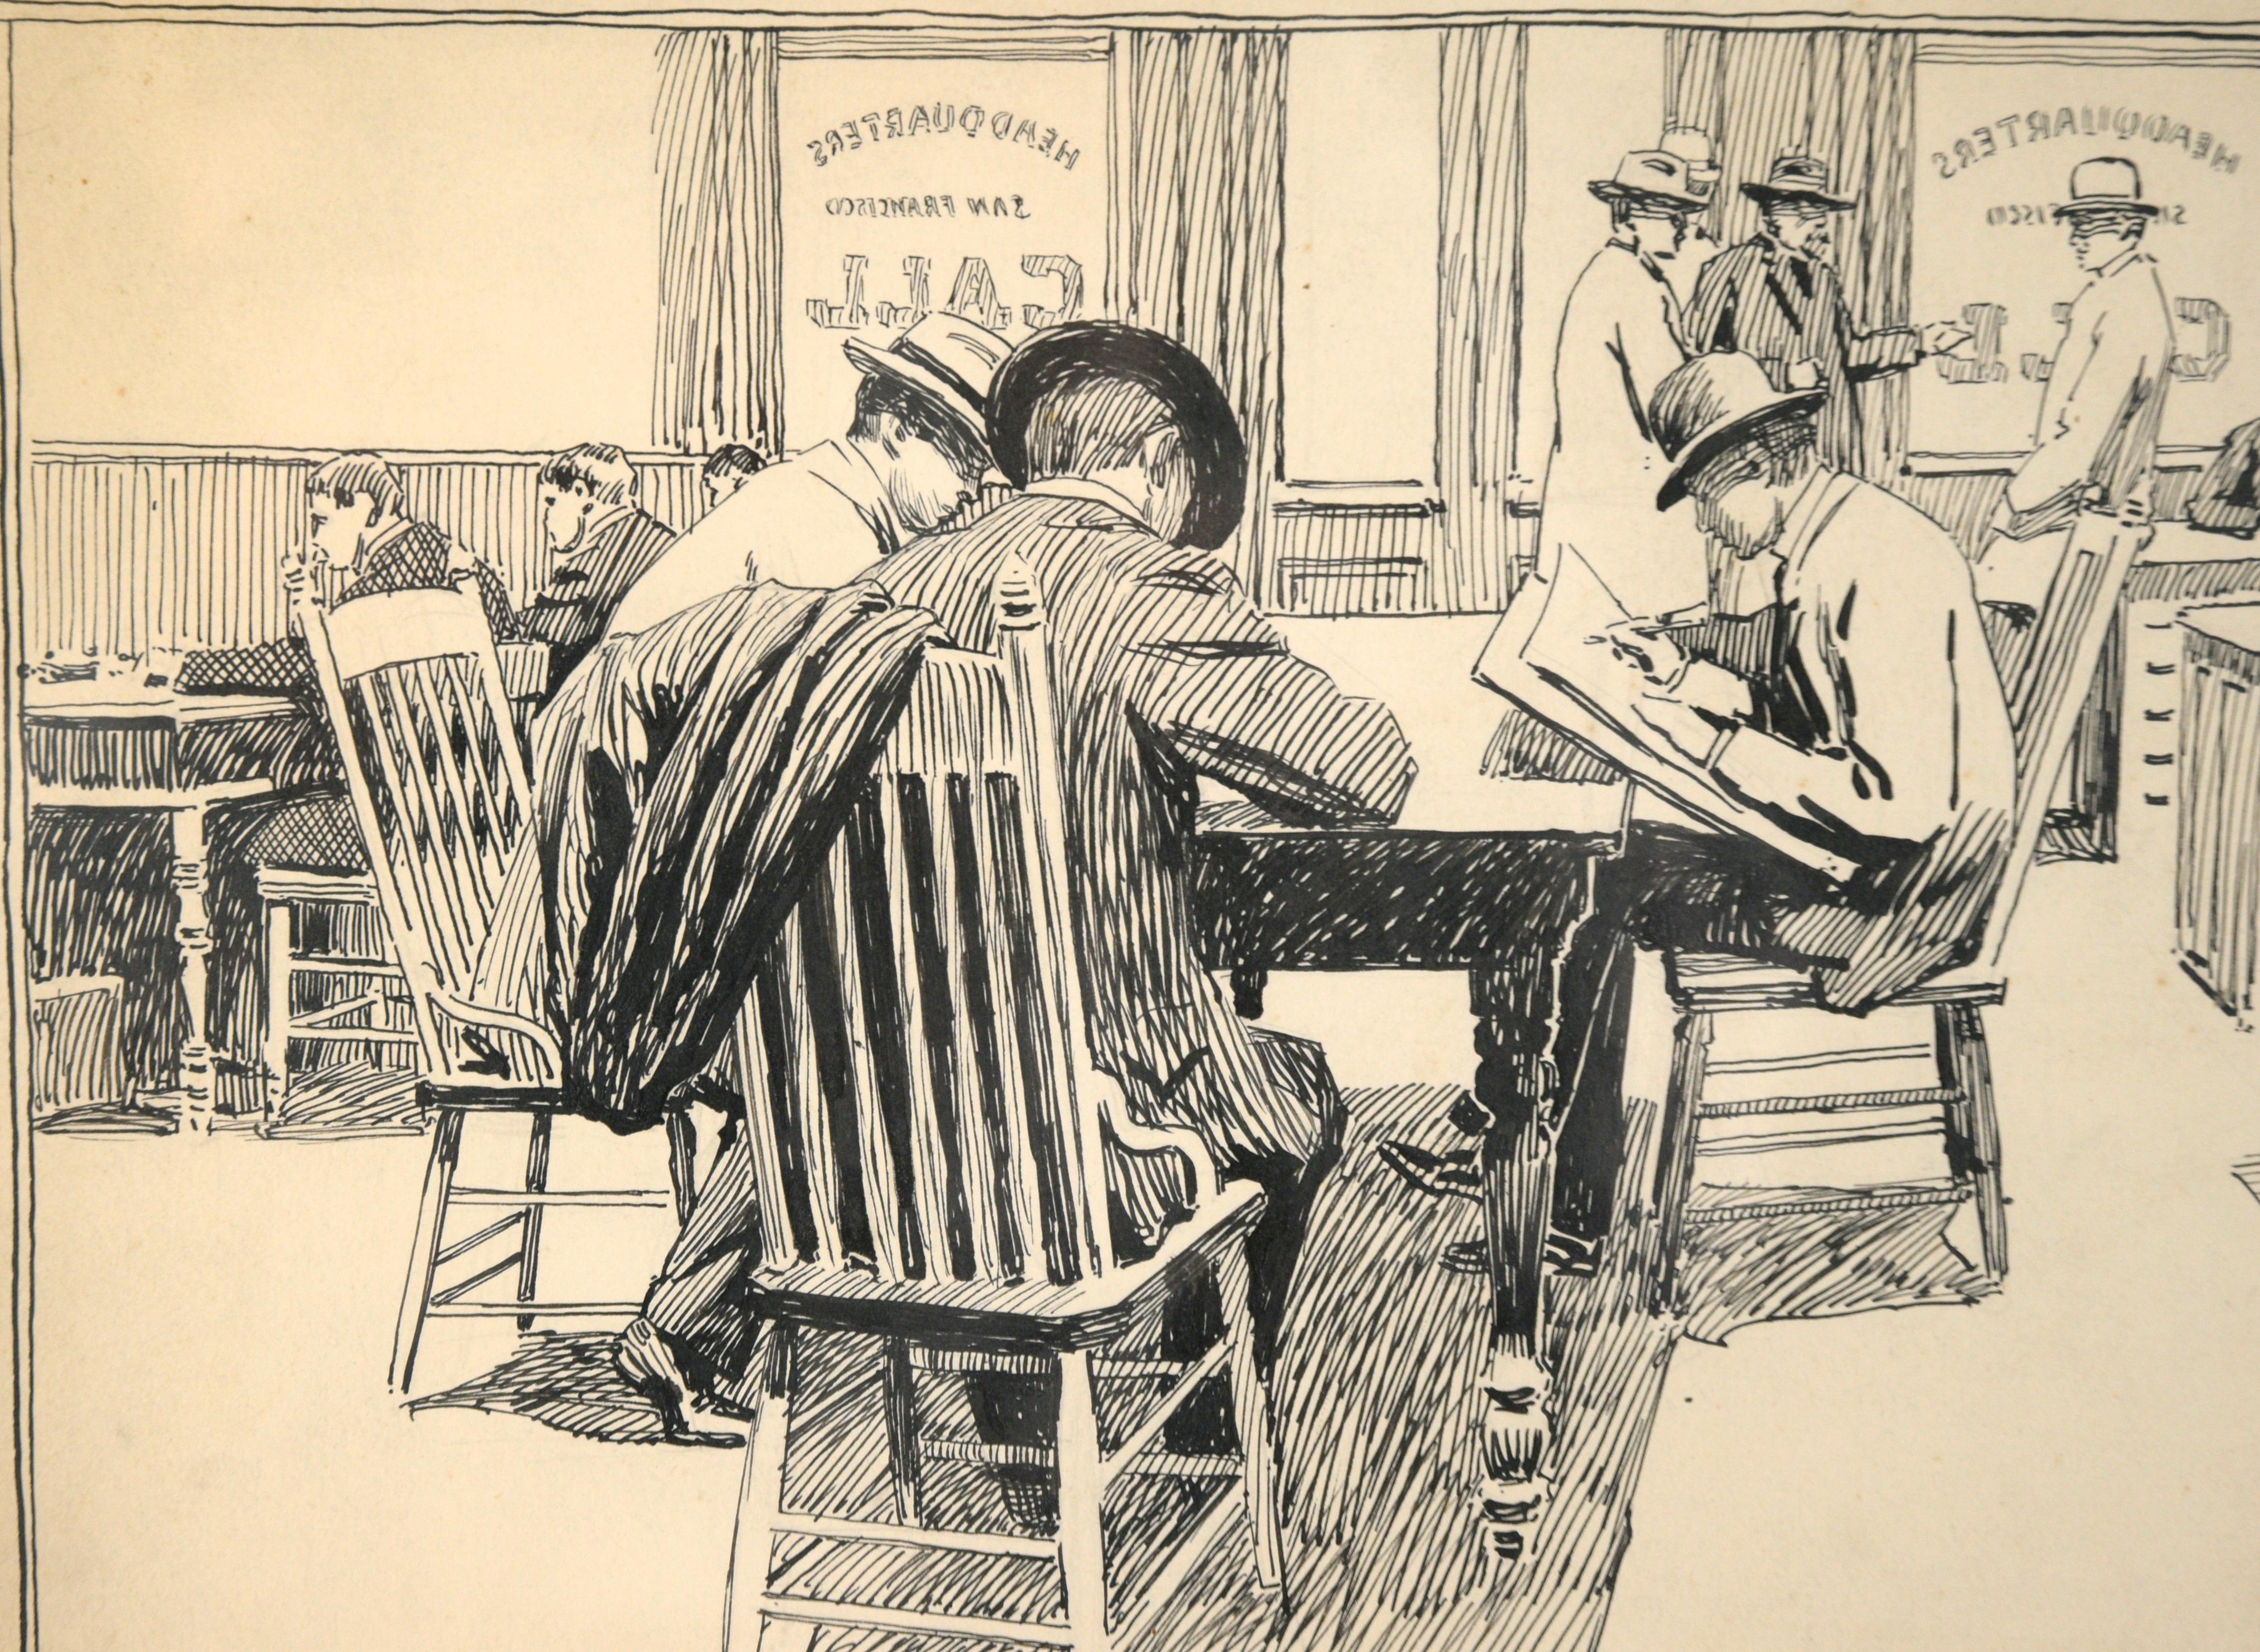 The Illustrator's Workroom at The San Francisco Call (L'atelier d'illustrateur au San Francisco Call), fin du 19e siècle Illustration - Réalisme américain Art par Adolph Methfessel